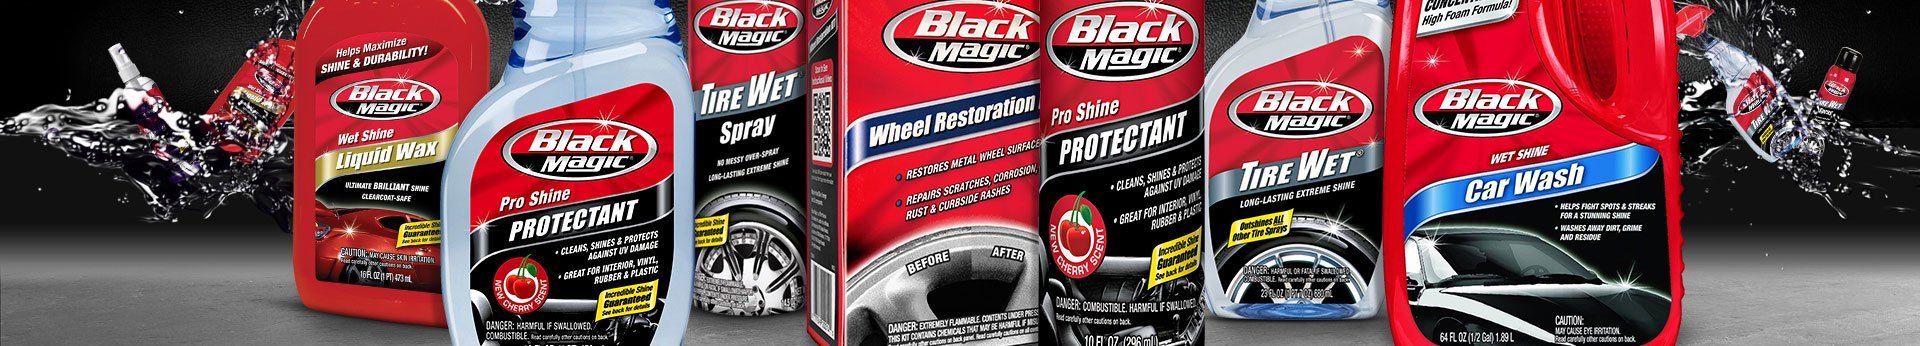 Black Magic Bleche-Wite Tire Cleaner Spray 32oz